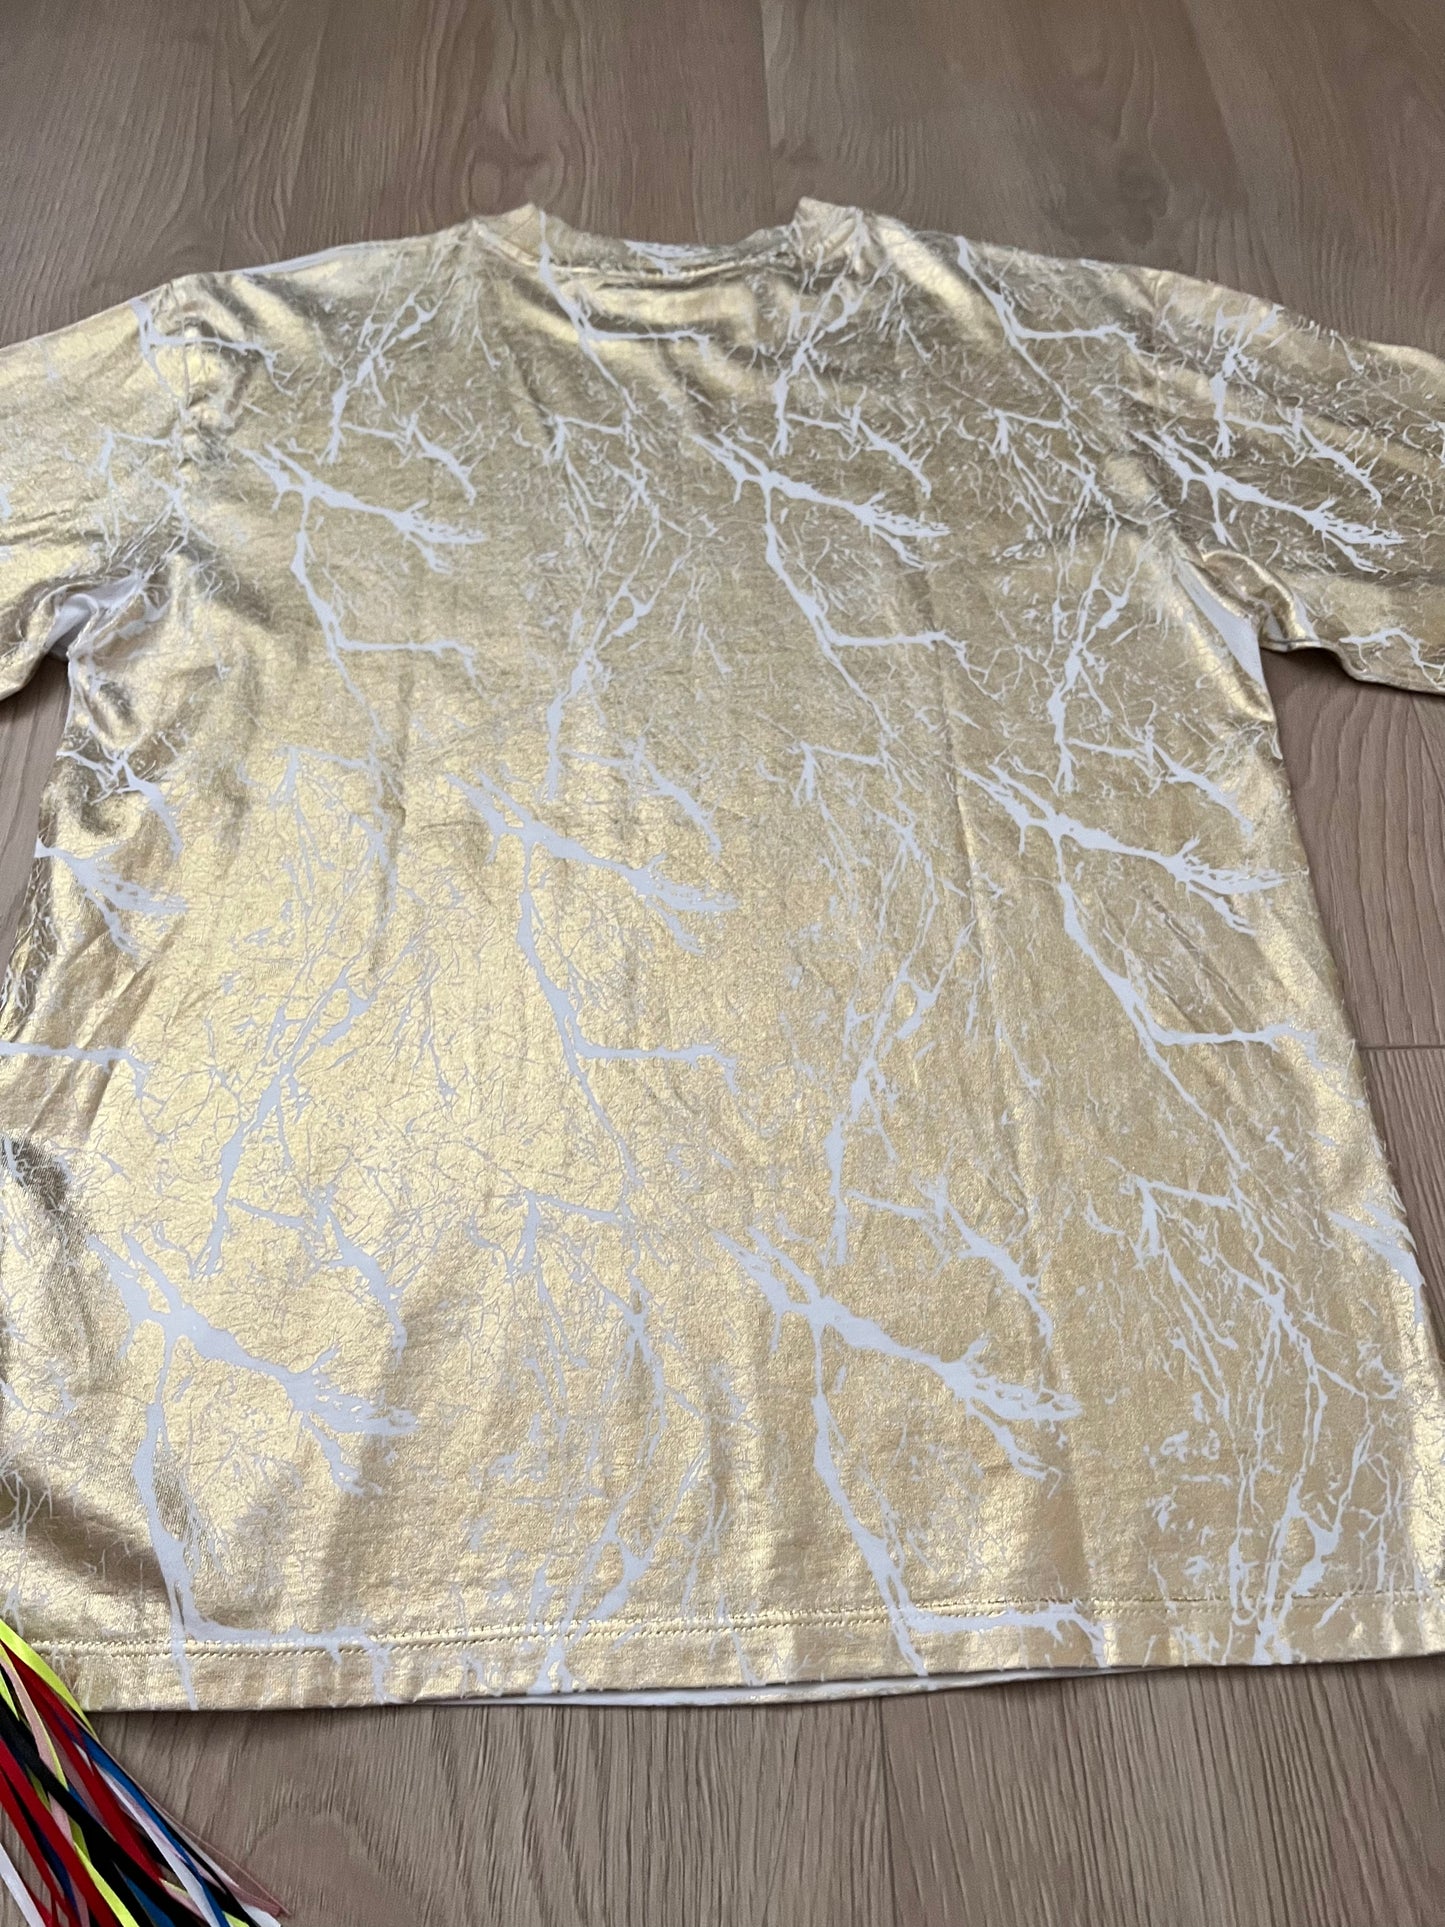 MSGM Crinkled Metallic T-Shirt